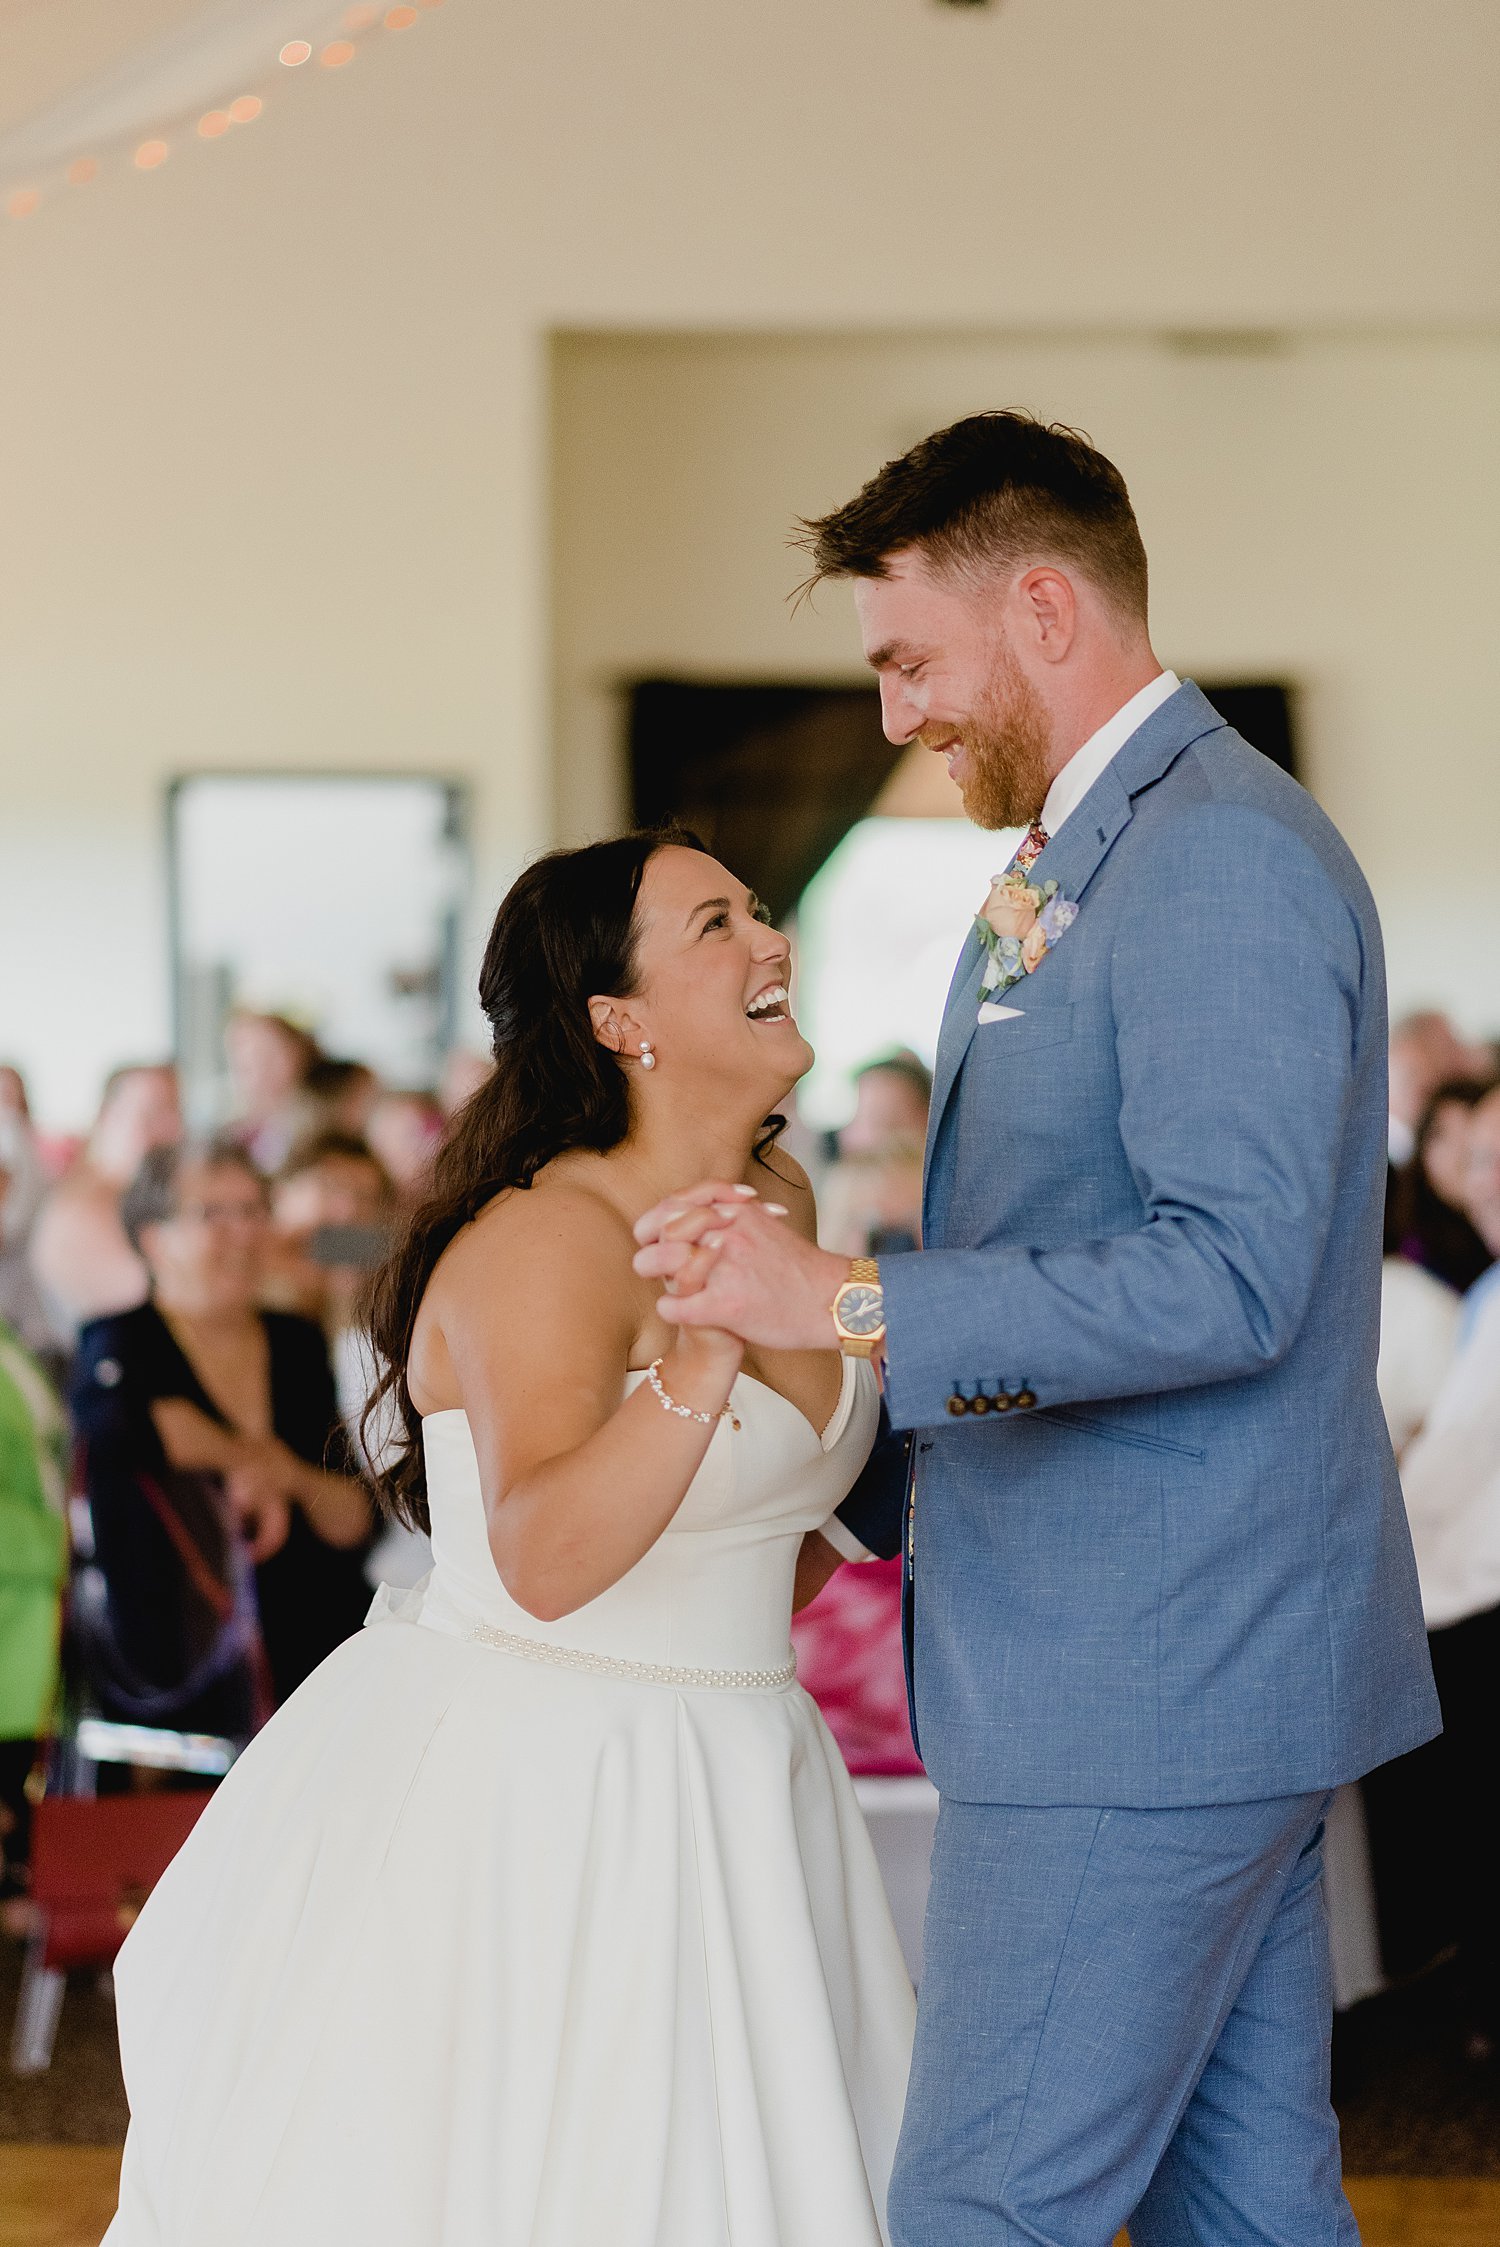 Casa Dea Winery Wedding in Prince Edward County | Prince Edward County Wedding Photographer | Holly McMurter Photographs_0145.jpg